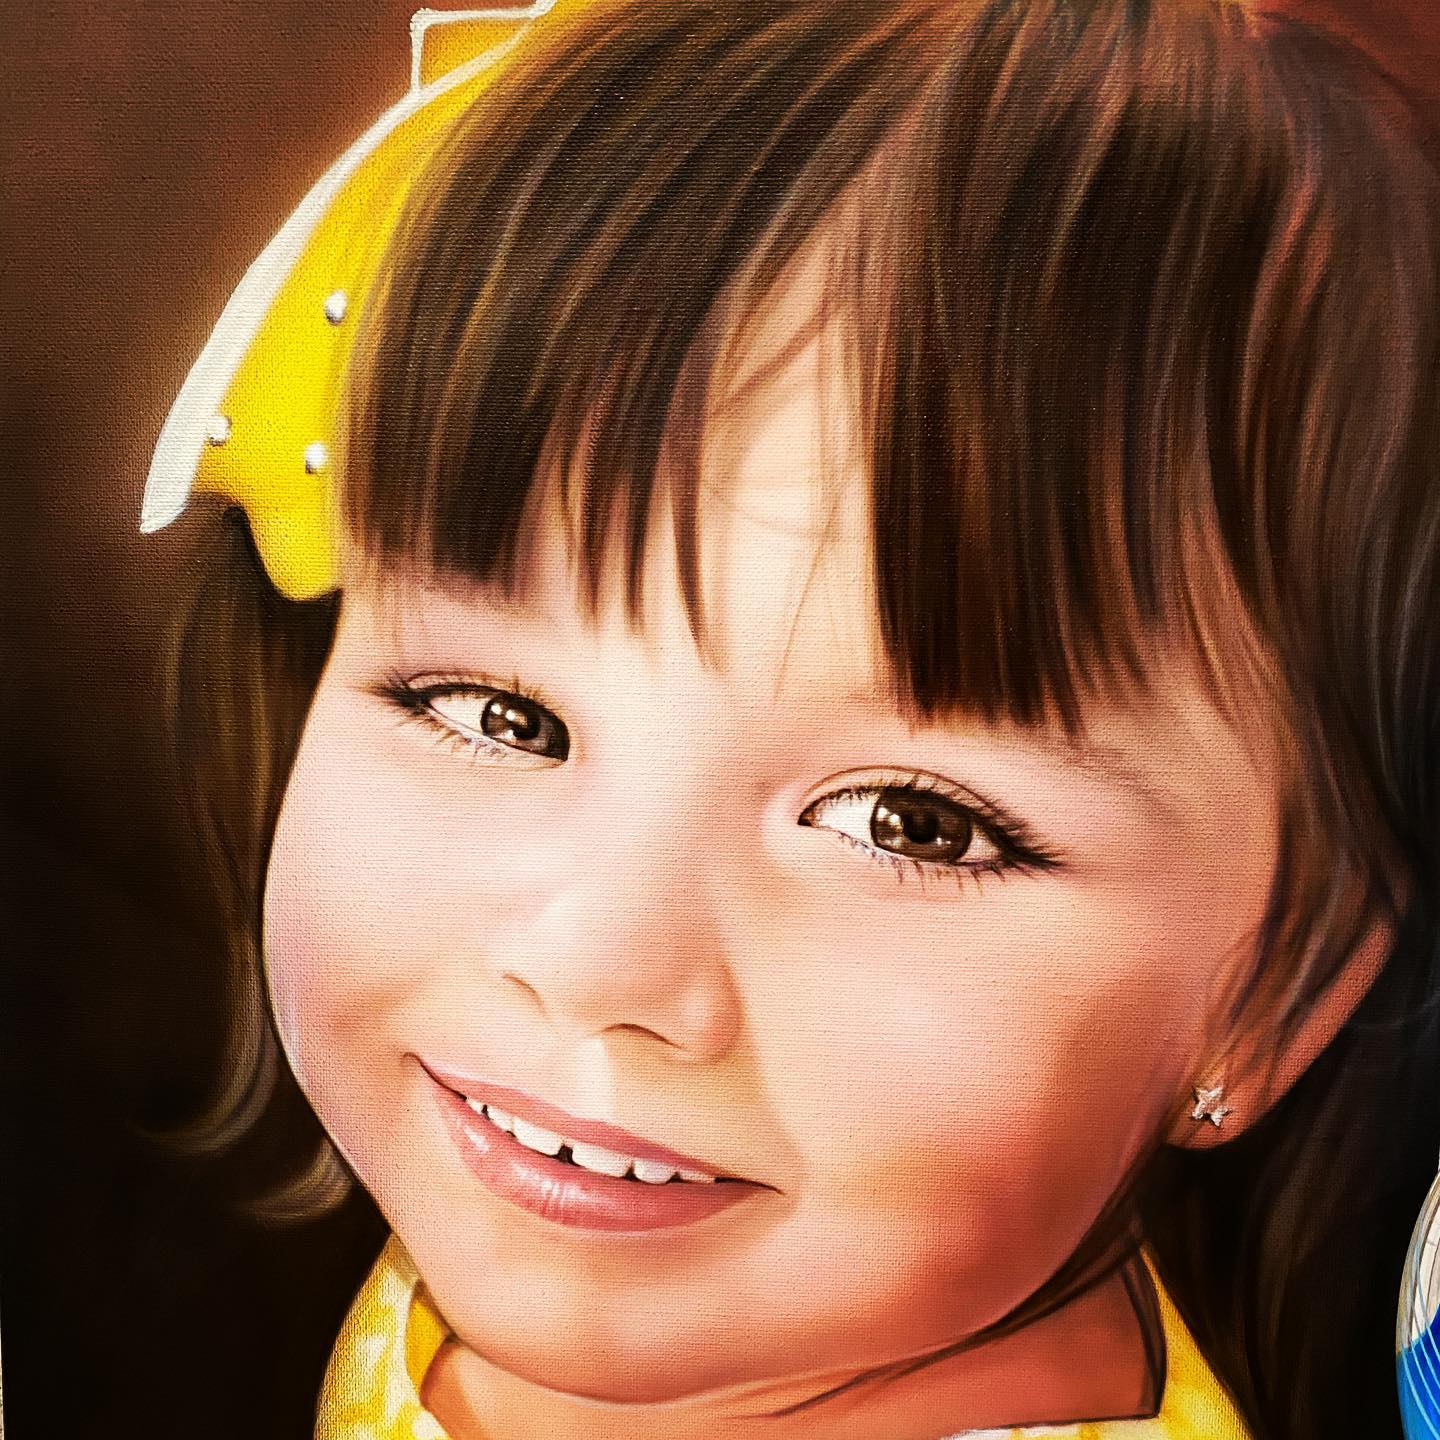 Airbrush Portrait 2